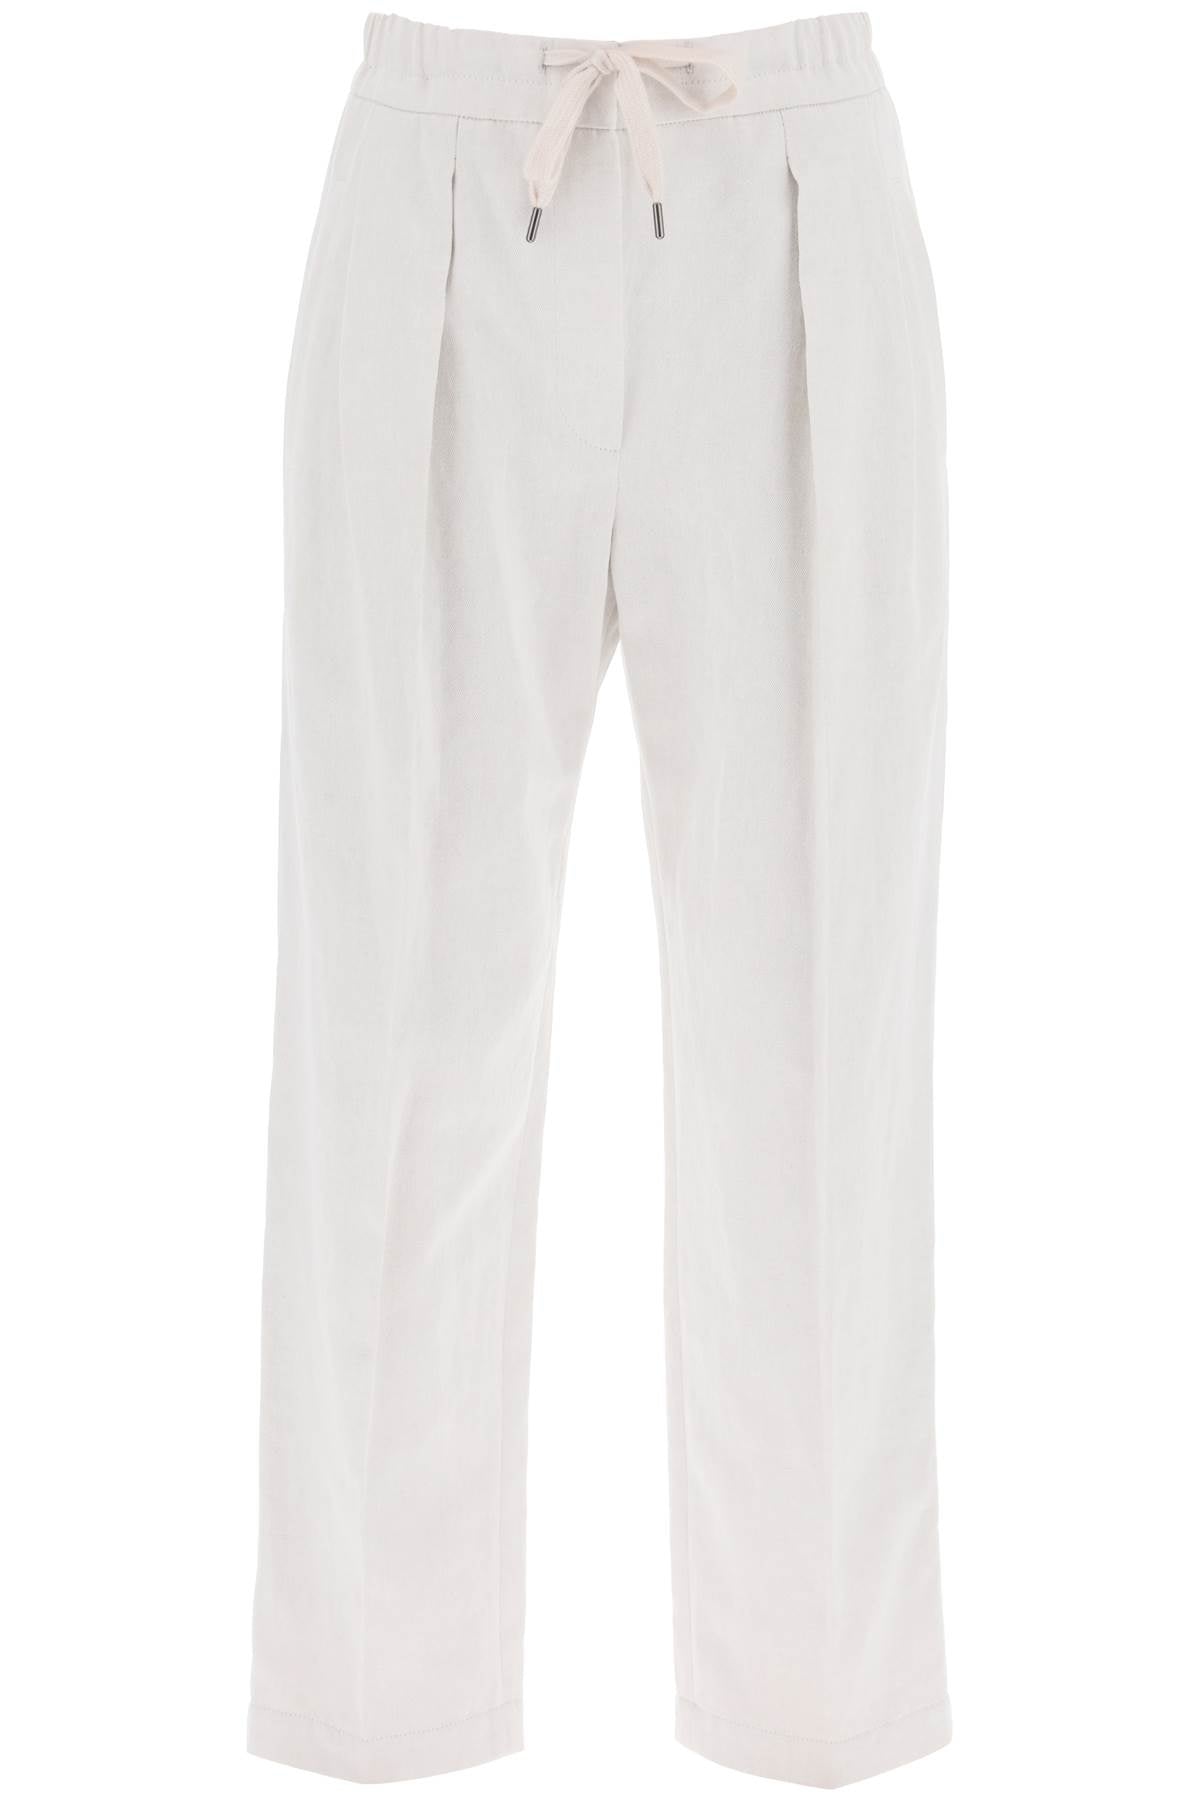 Brunello cucinelli cotton and linen slouchy pants-0